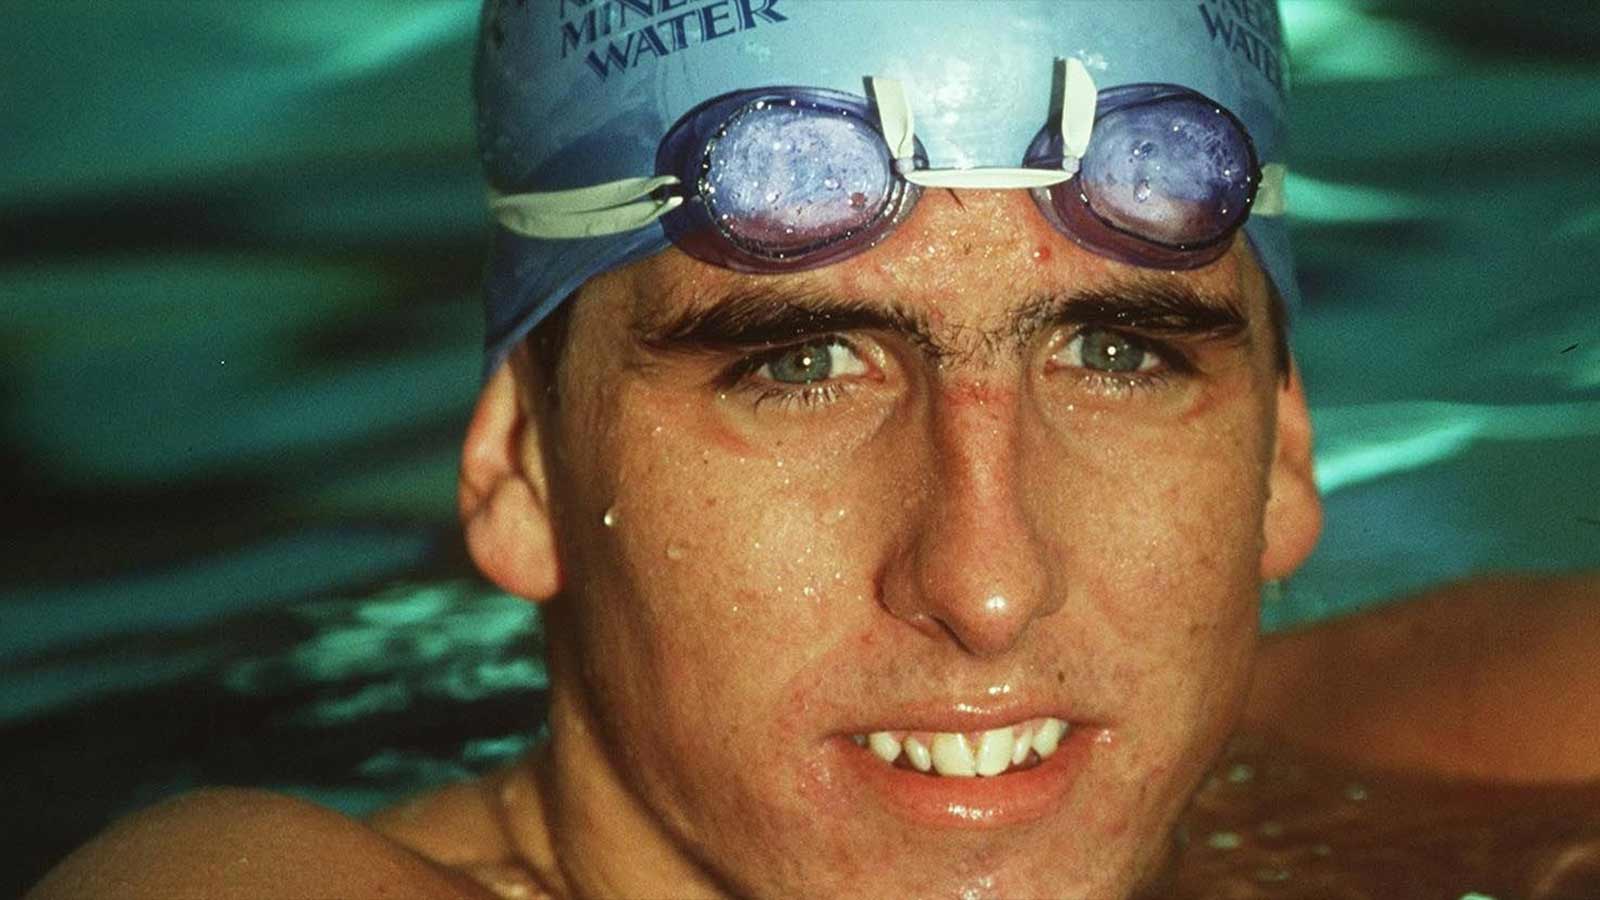 Gary O’Toole - A swimming legend